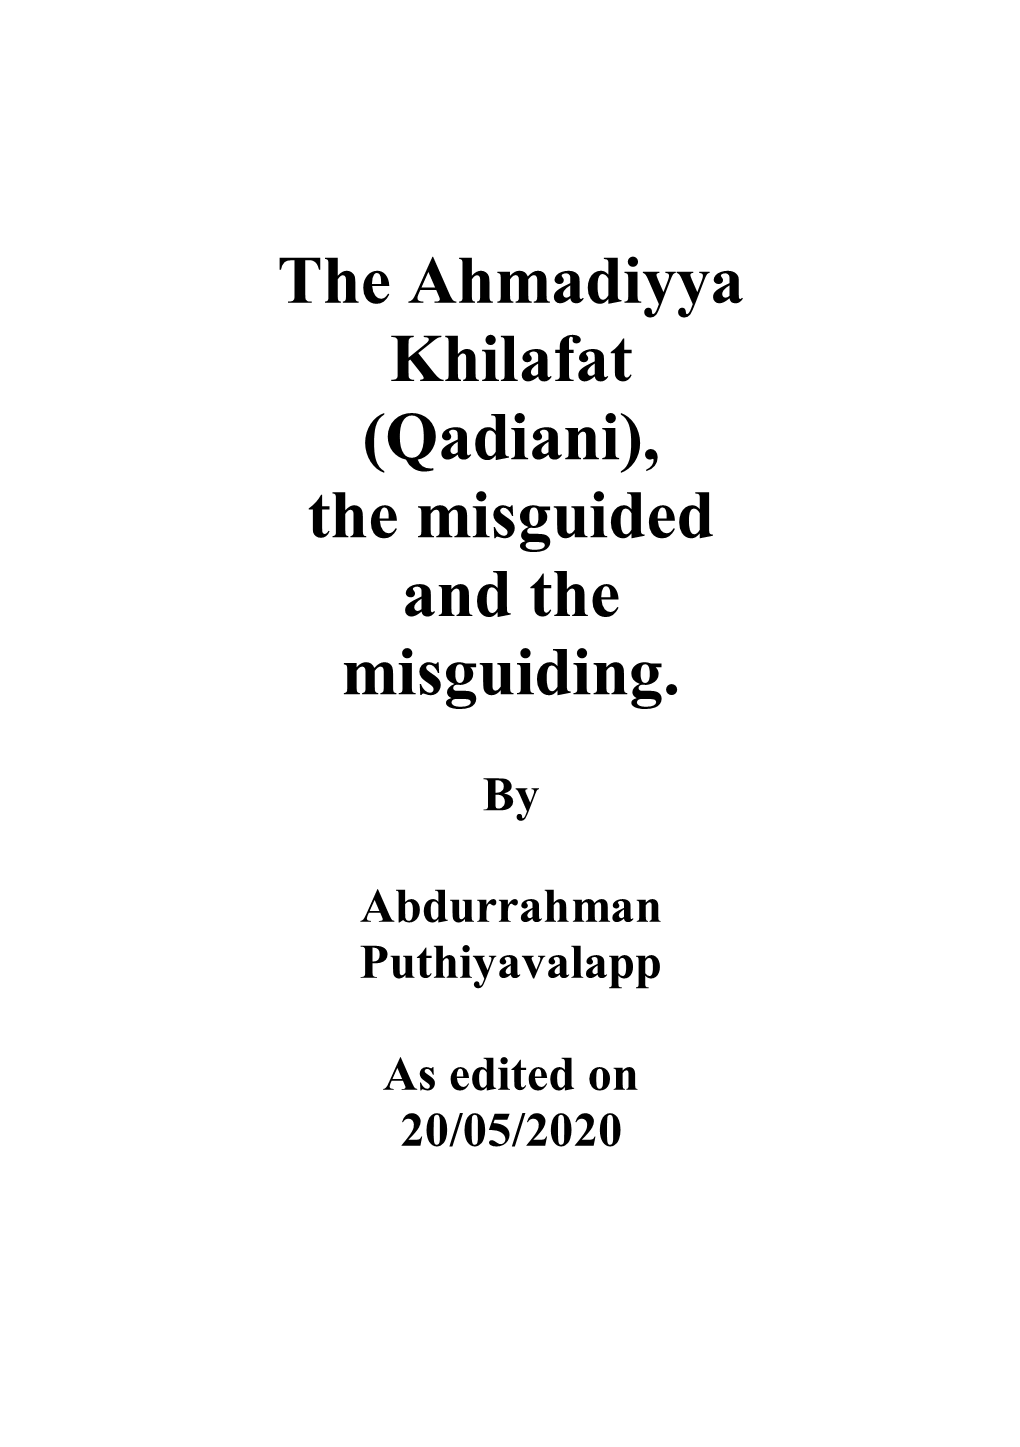 The Ahmadiyya Khilafat (Qadiani), the Misguided and the Misguiding